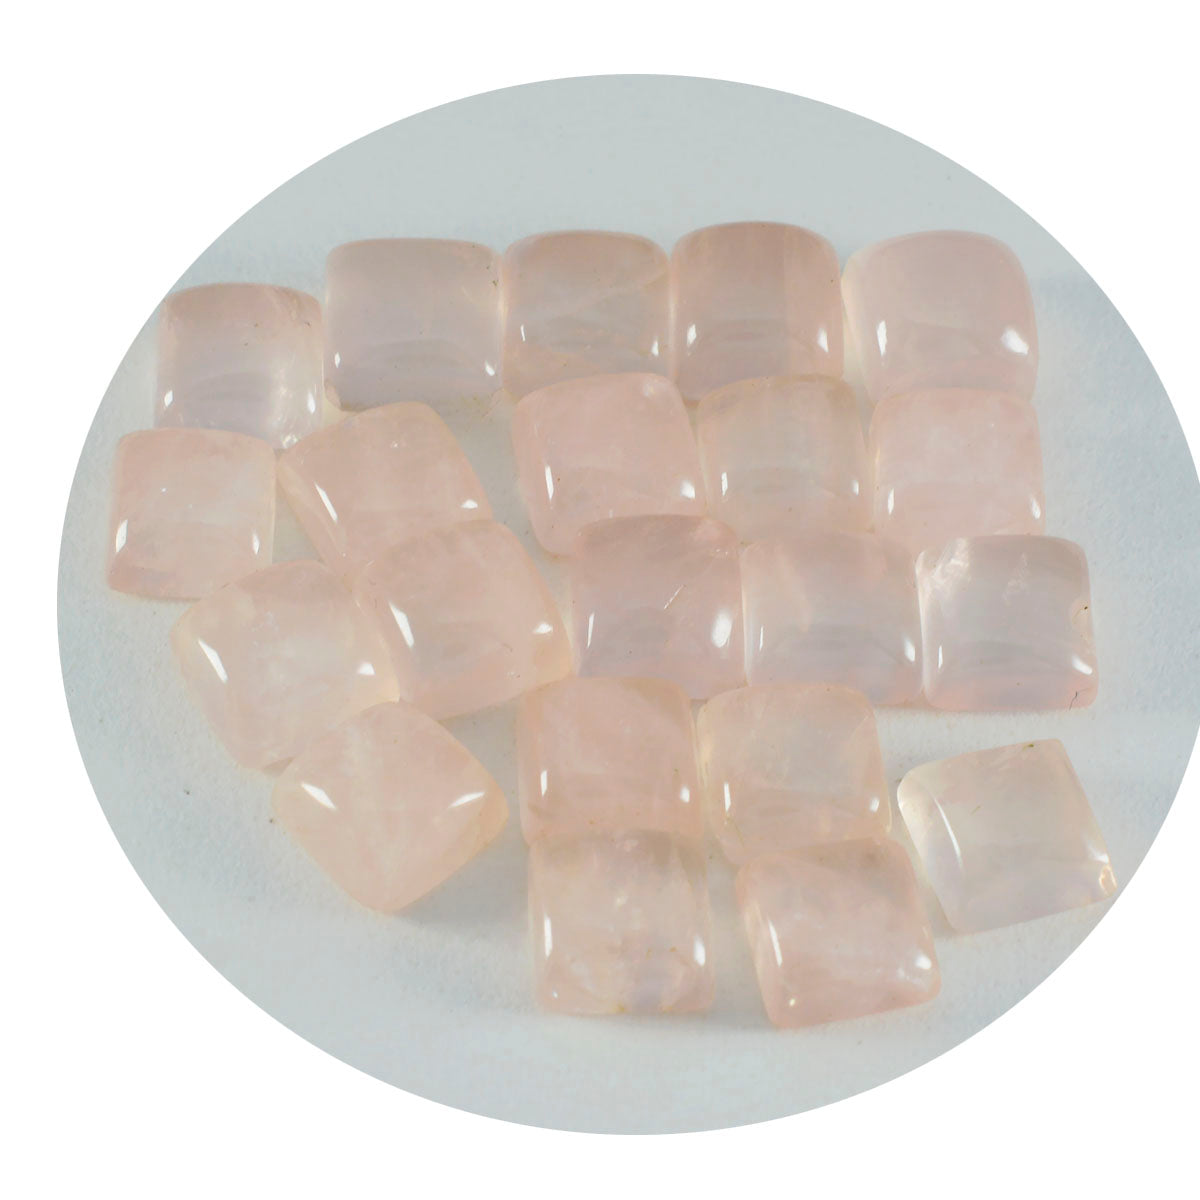 Riyogems 1PC Pink Rose Quartz Cabochon 11x11 mm Square Shape wonderful Quality Loose Stone